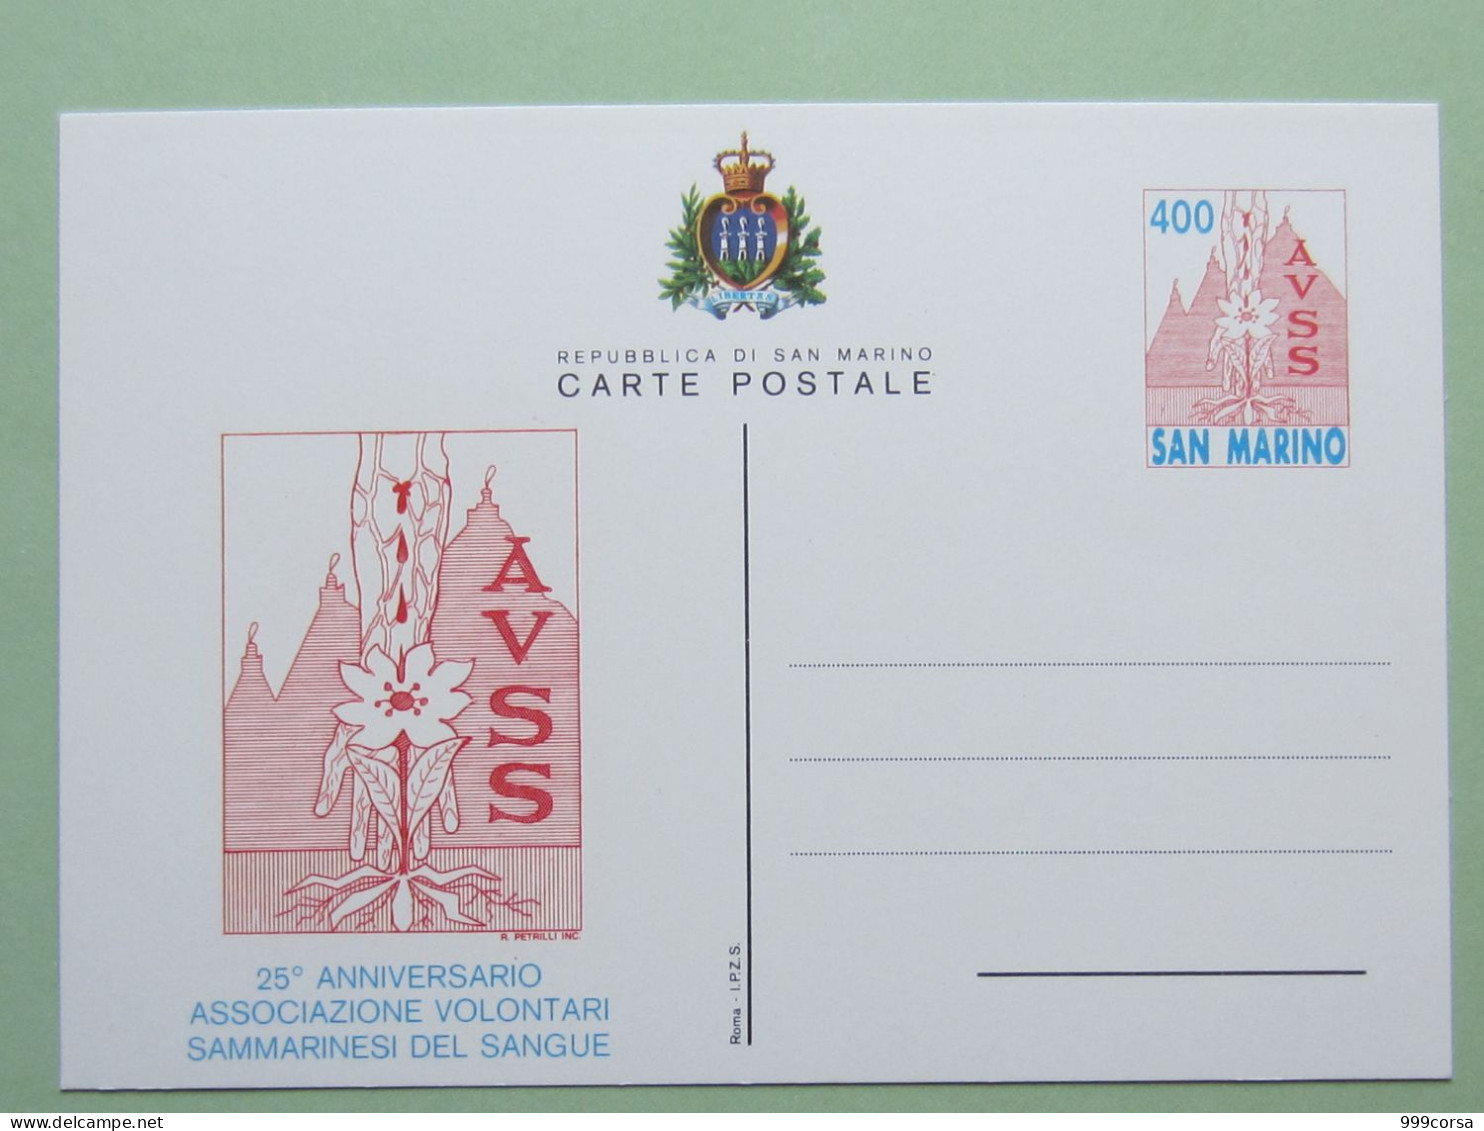 San Marino,lotto Interi Postali (busta Asiago Arte Filatelica,cart.post.Alfa Romeo 75°ann.,aerogramma Olimphilex 1985,ec - Ganzsachen